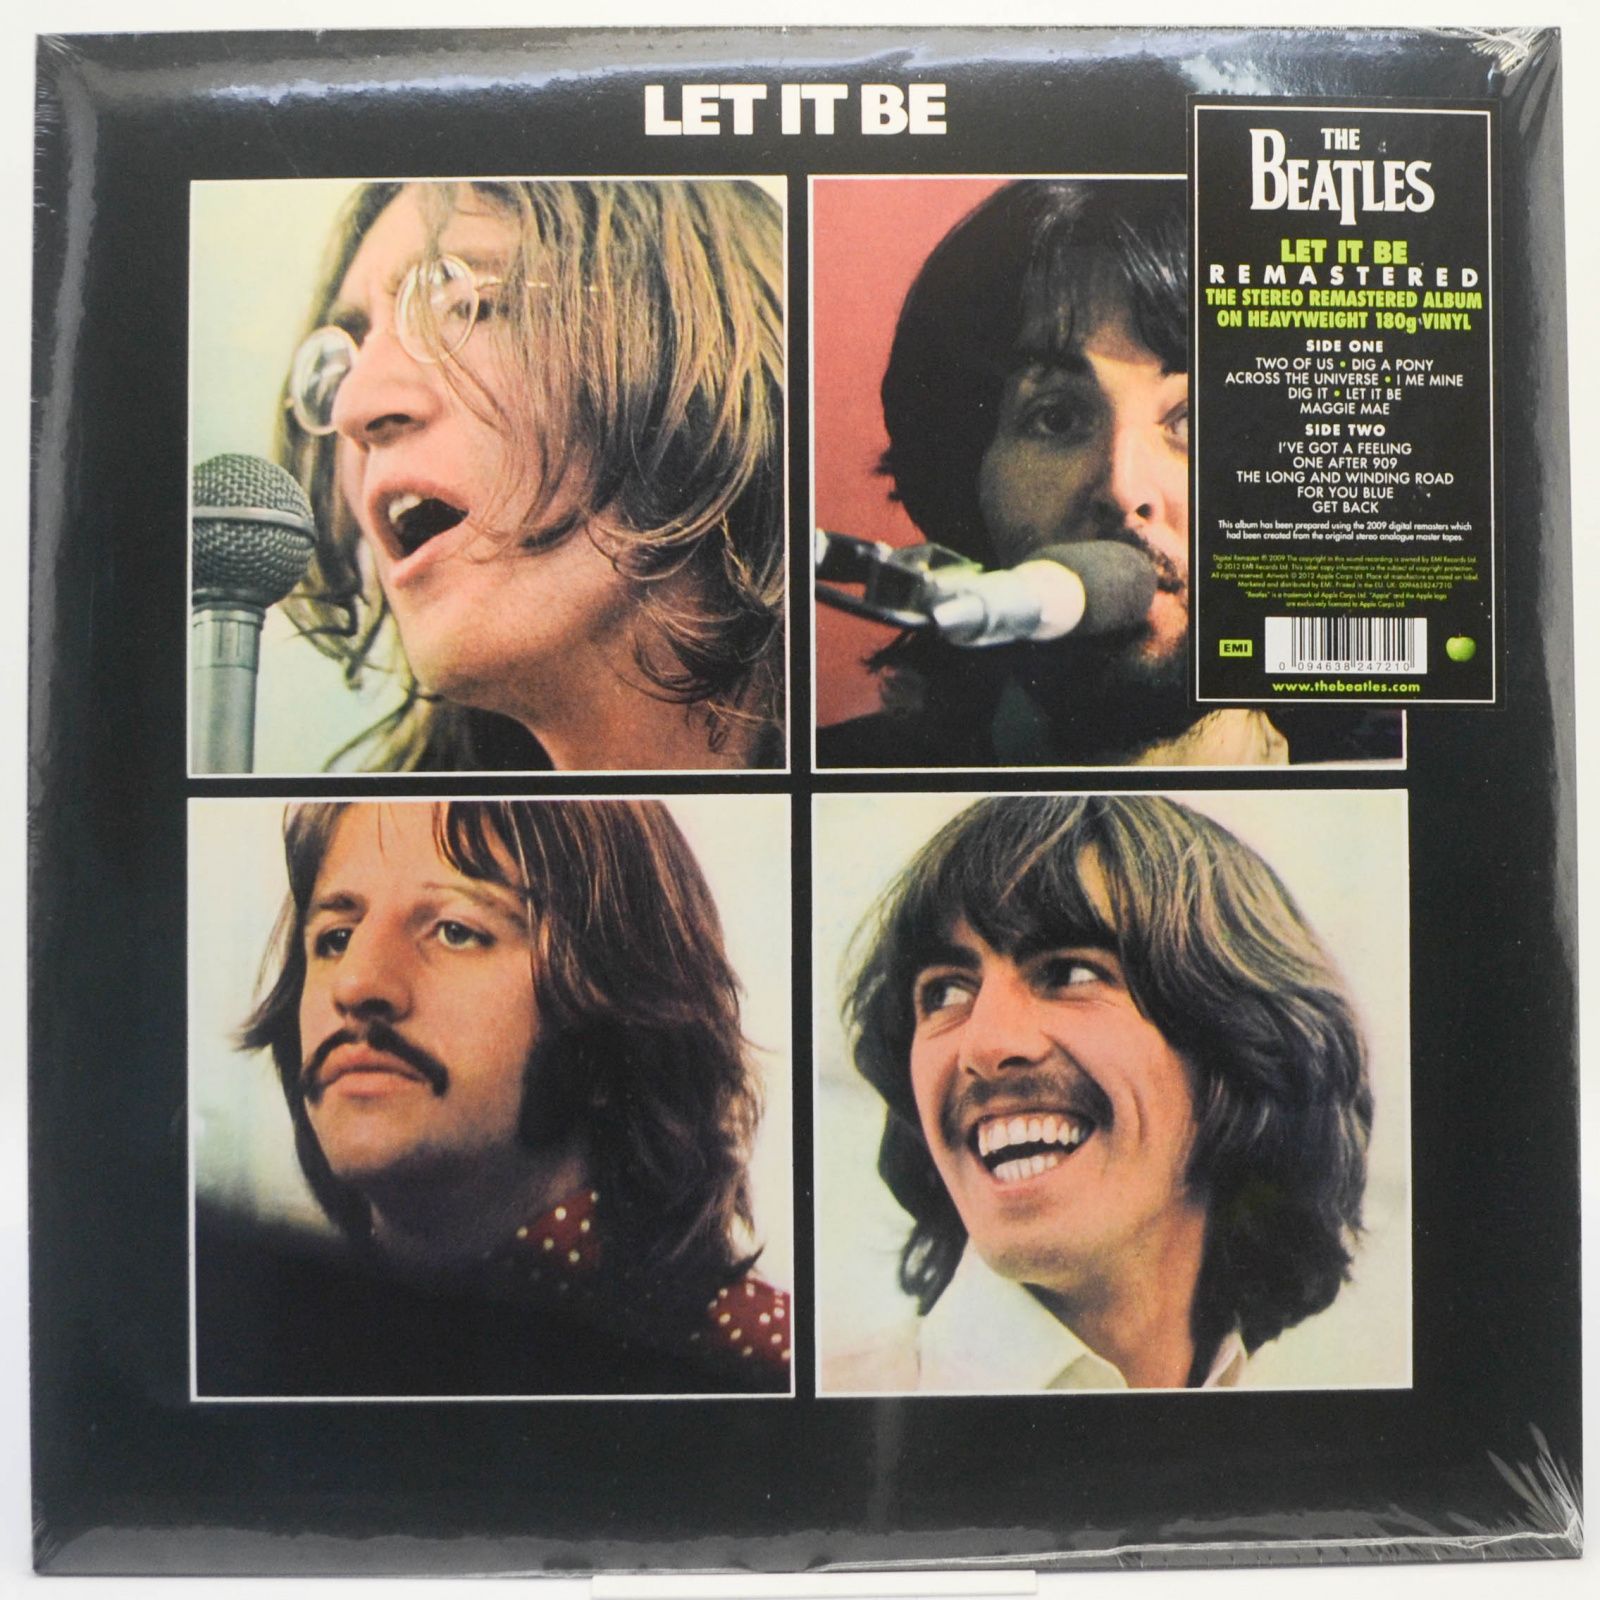 Let It Be, 1970